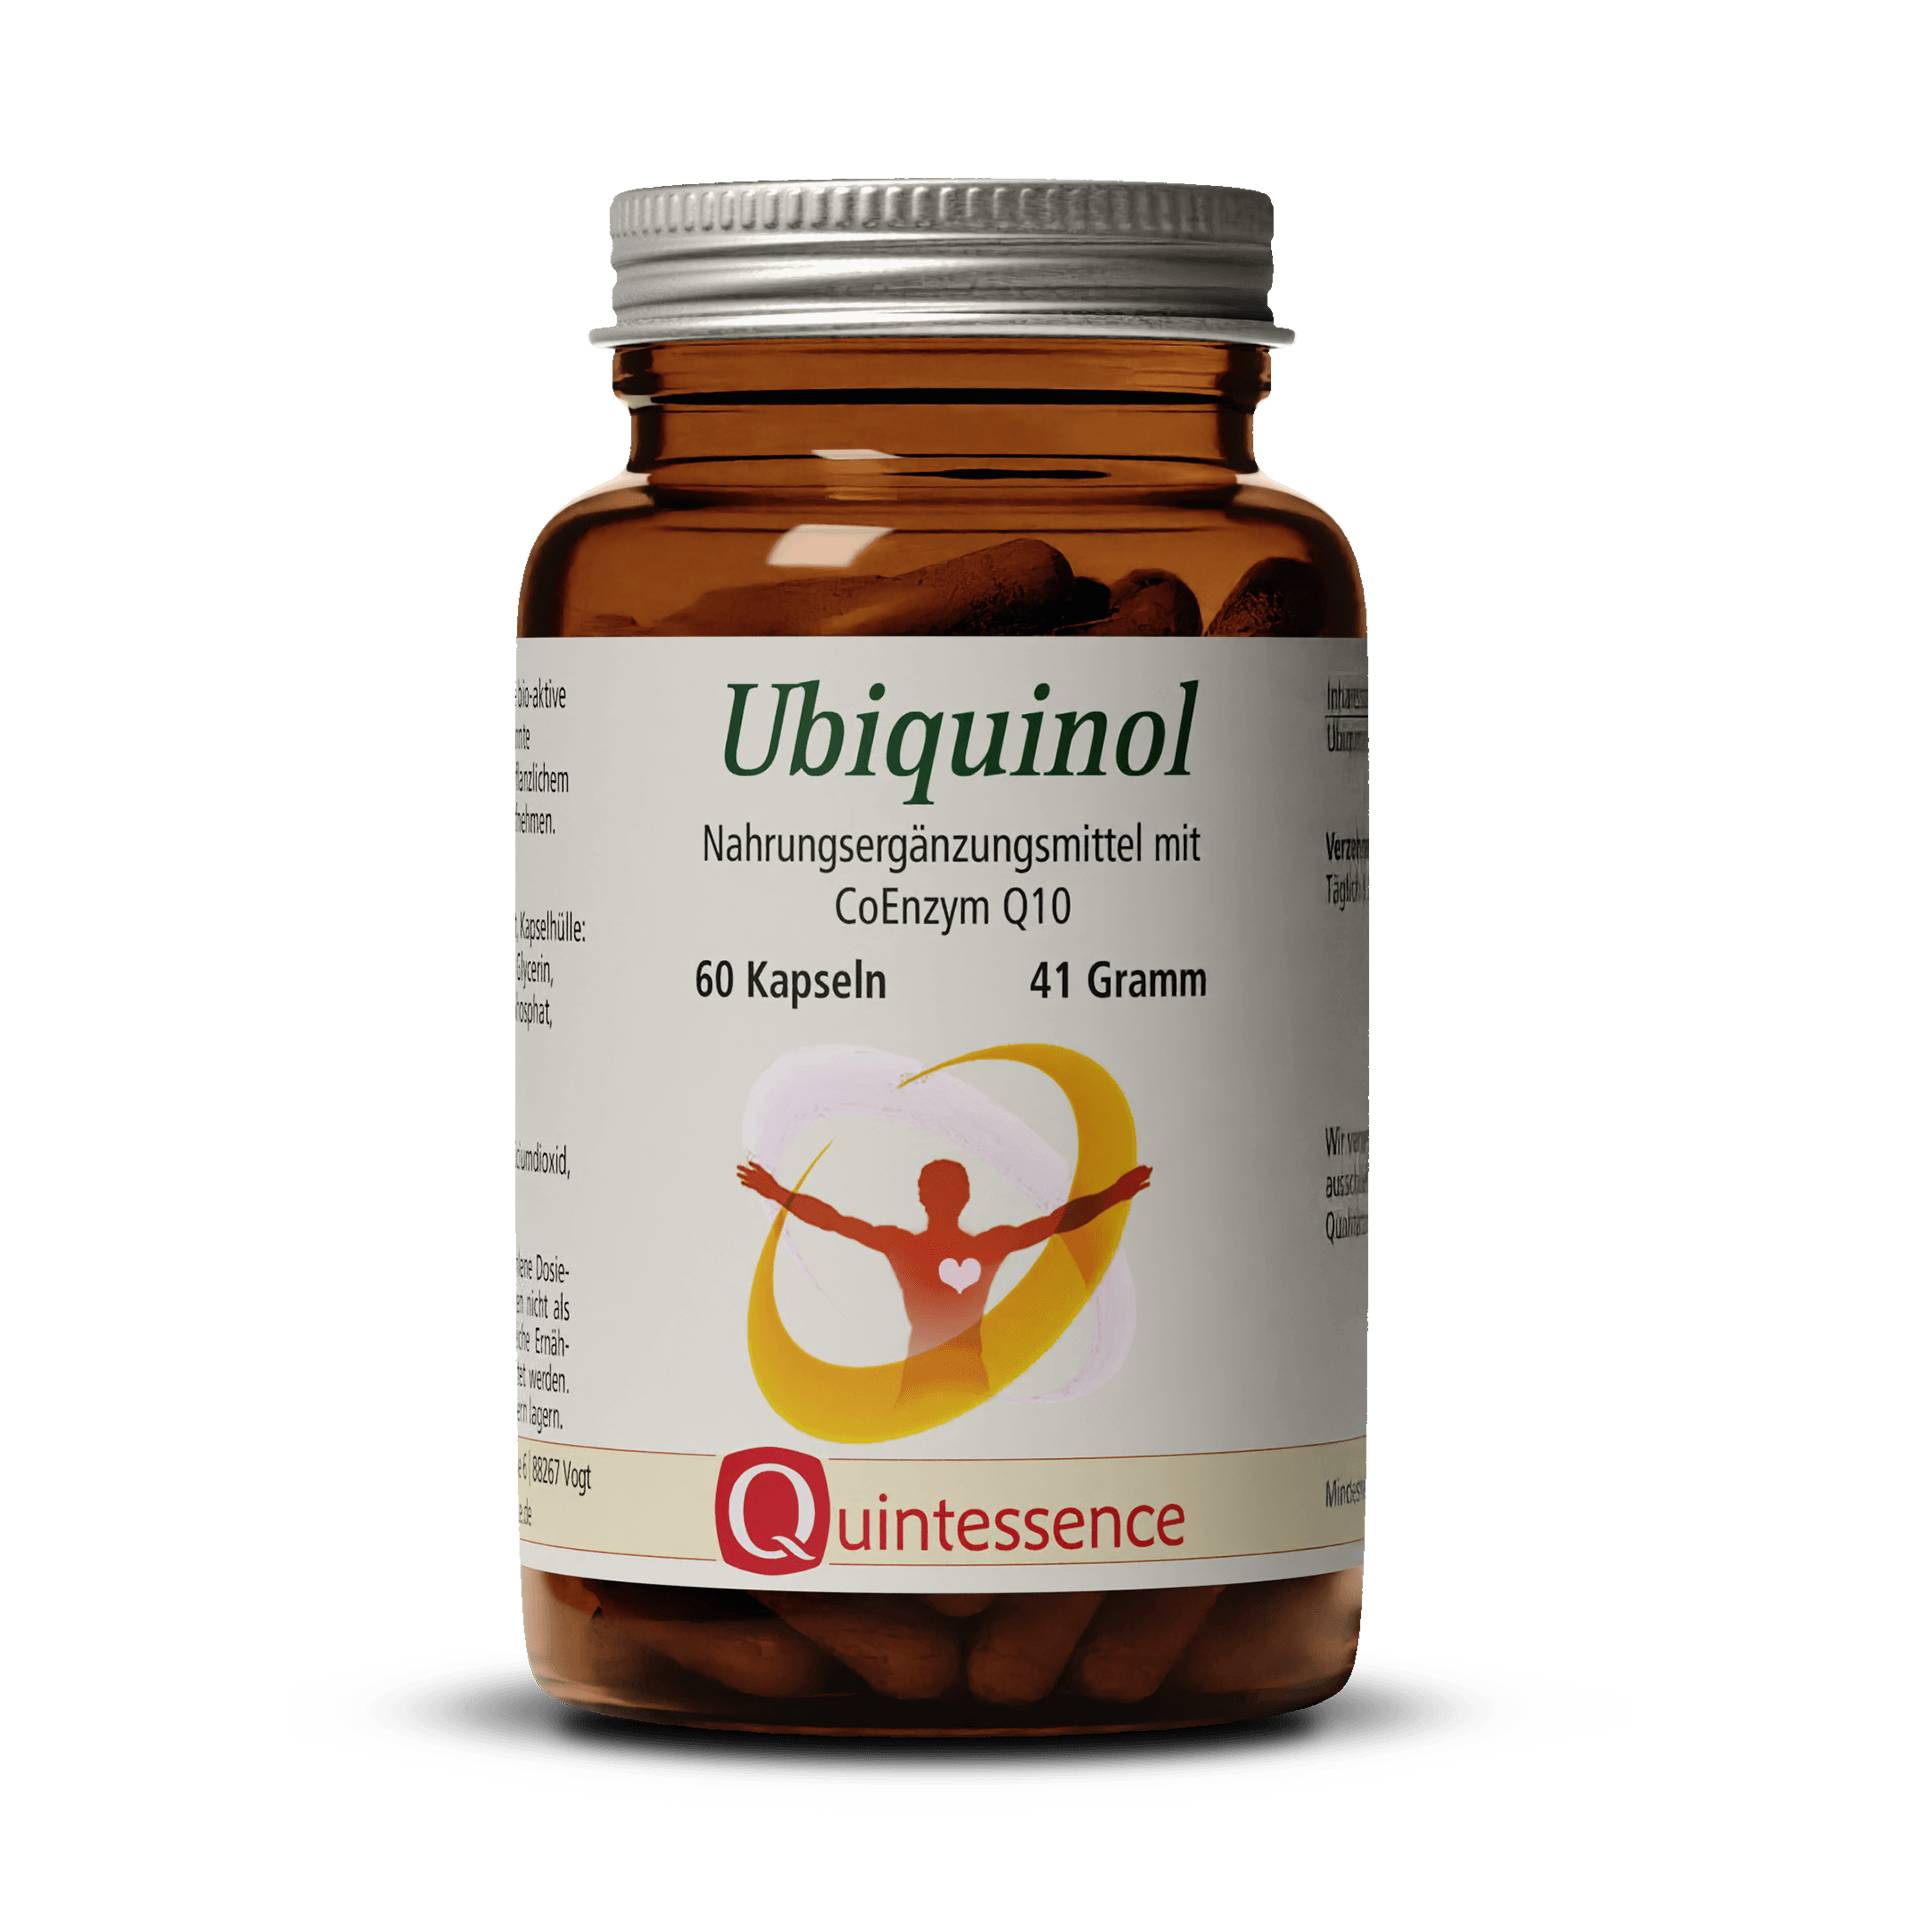 Ubiquinol 60 Kapseln - Kaneka-Ubiquinol - 100 mg bioaktives CoEnzym Q10 pro Kapsel - Quintessence von Quintessence